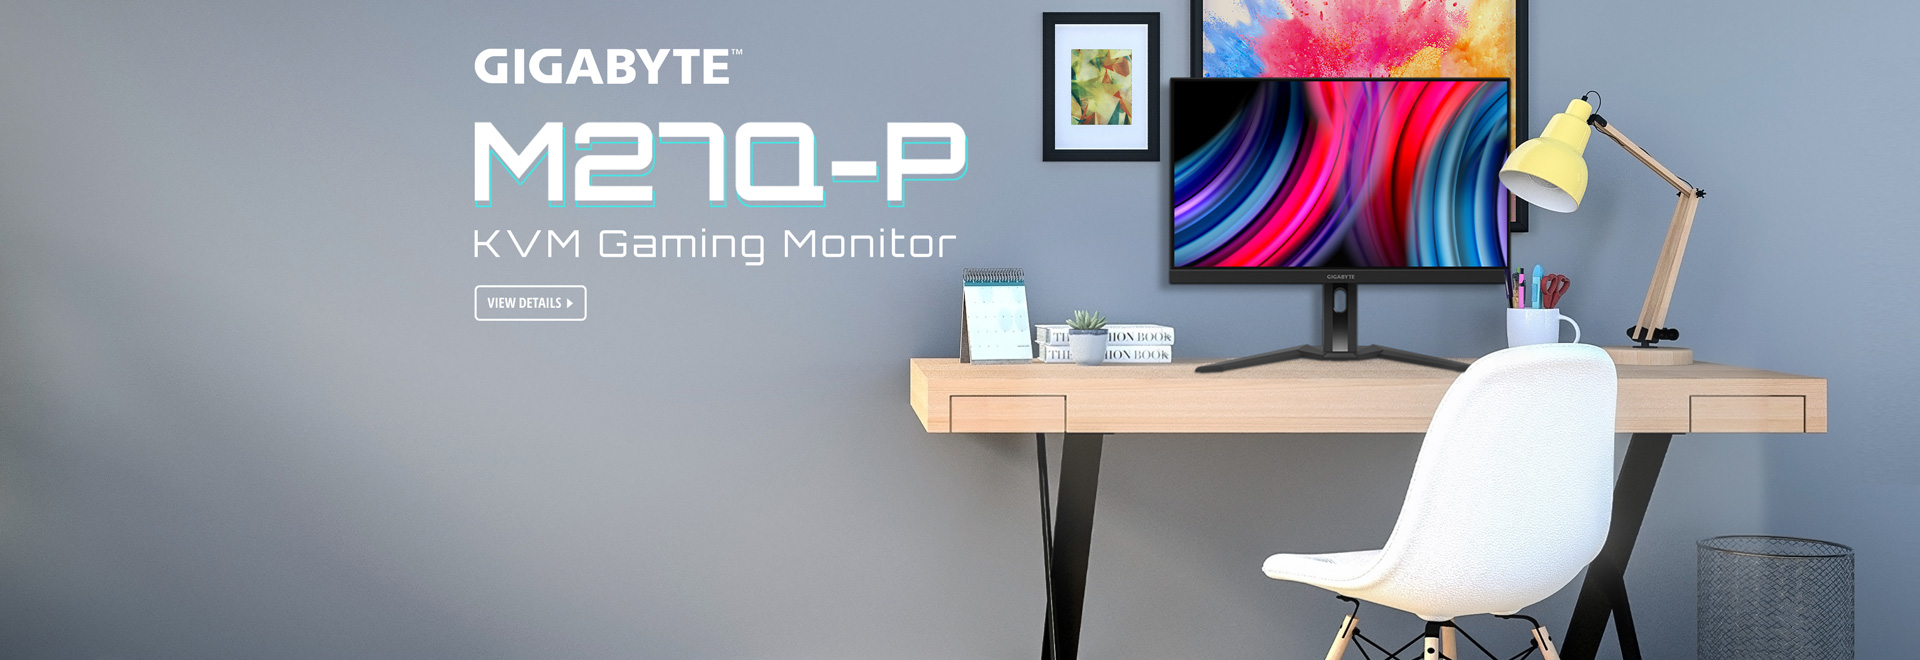 KVM Gaming Monitor